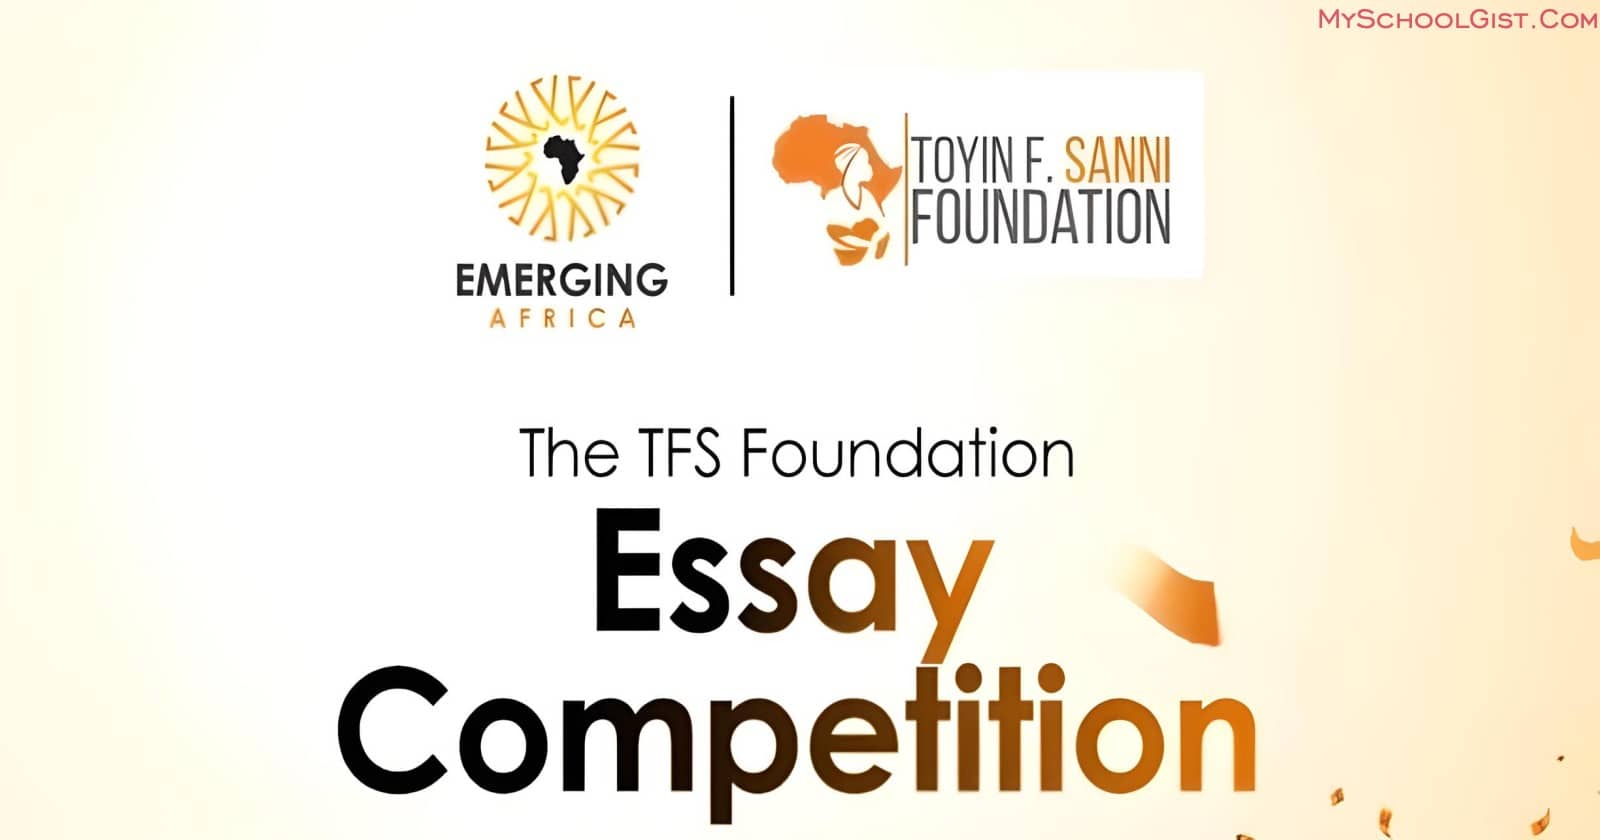 Toyin Sanni Foundation National Essay Competition